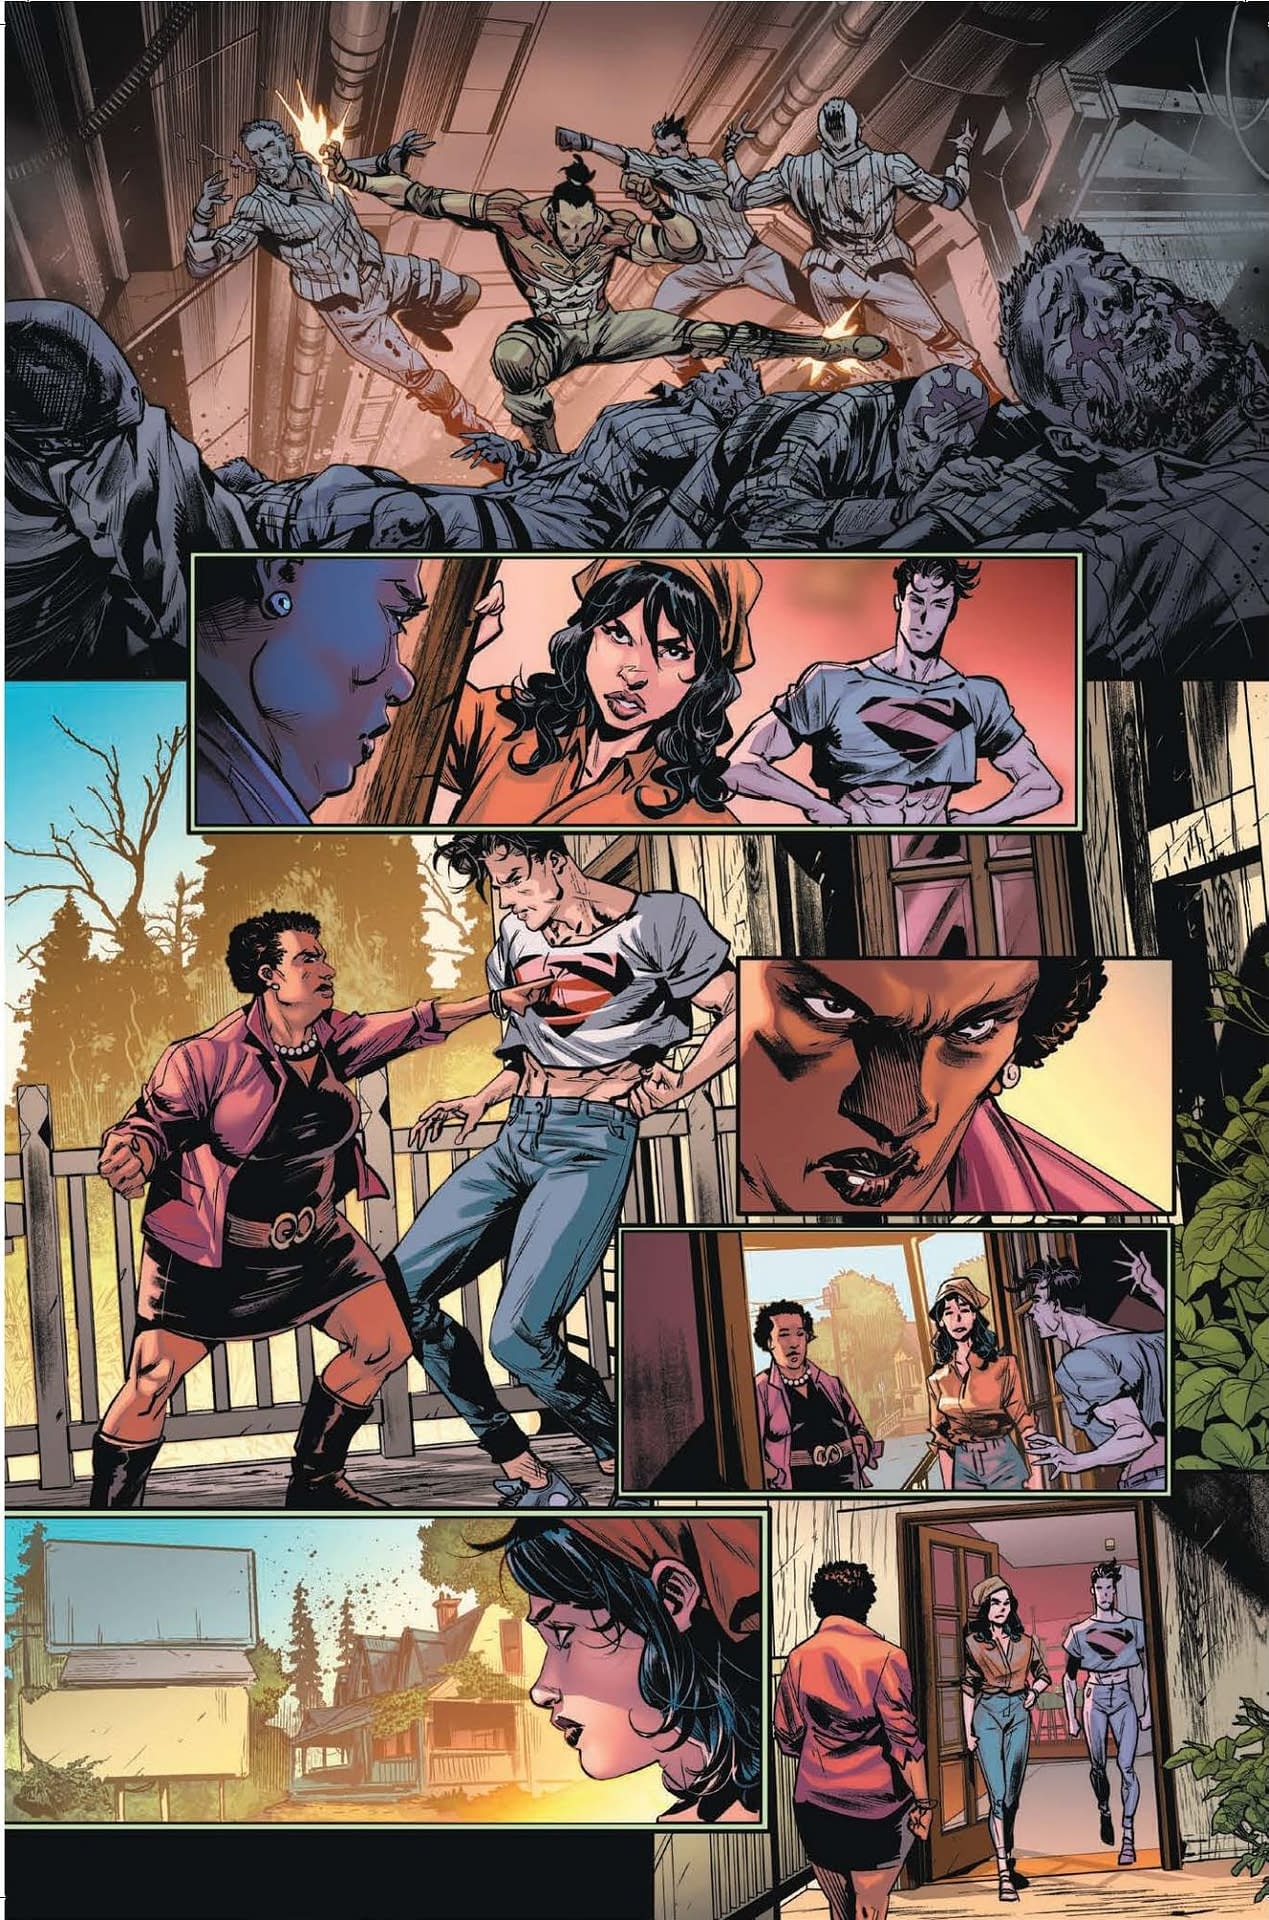 Action Comics #1060